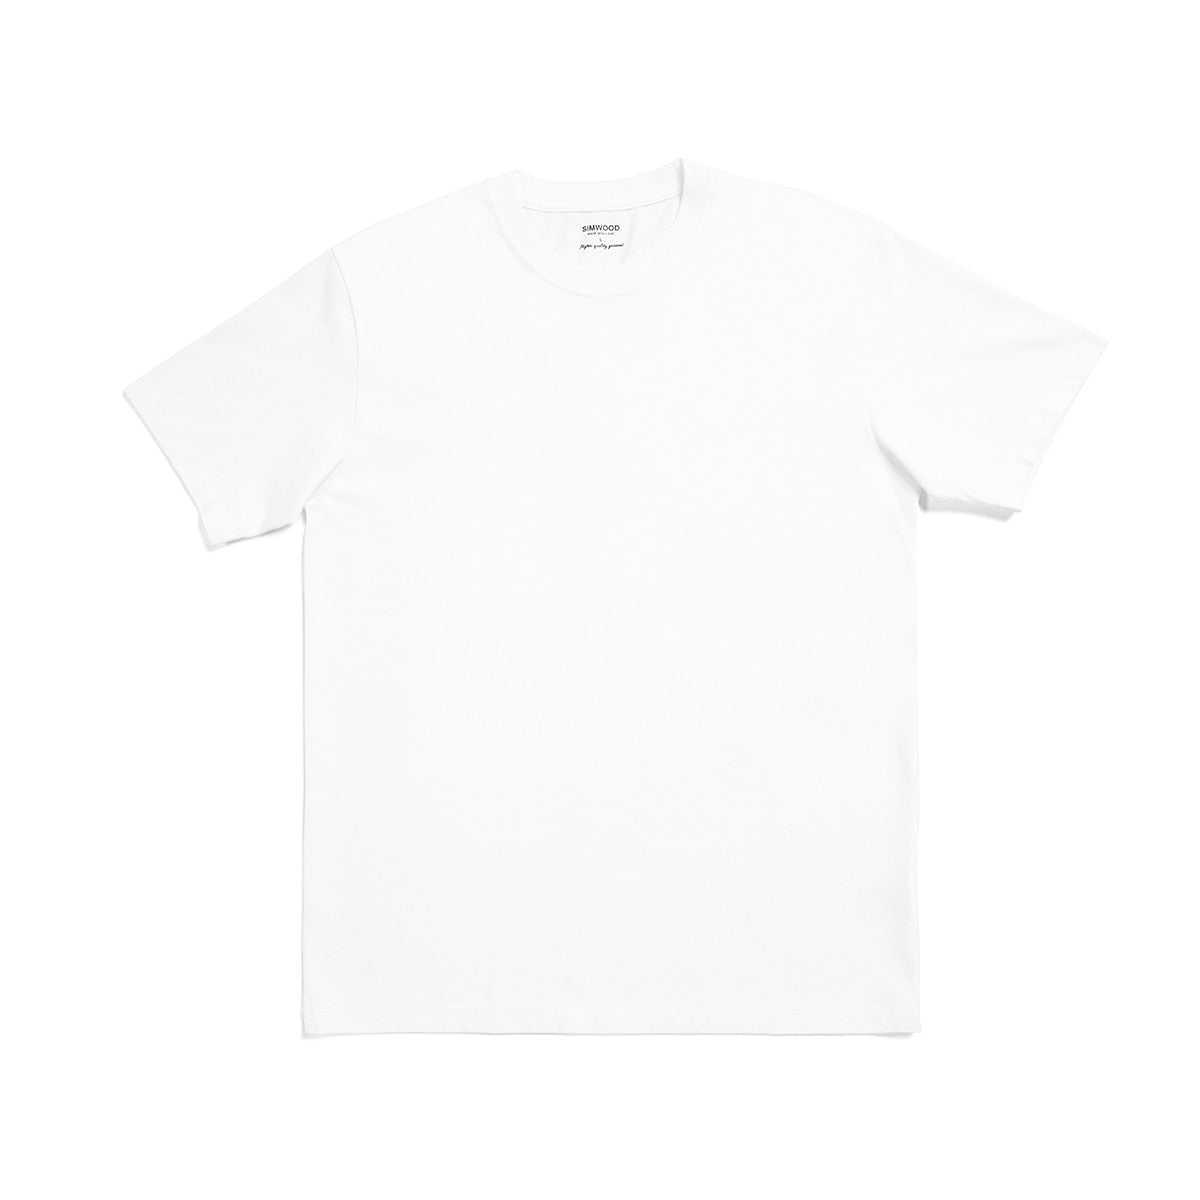 100% Algodón Blanco Sólido Camiseta Hombre Causal O-cuello Camiseta básica Hombre Alta calidad Clásico Tops XL / XXL / XXXL